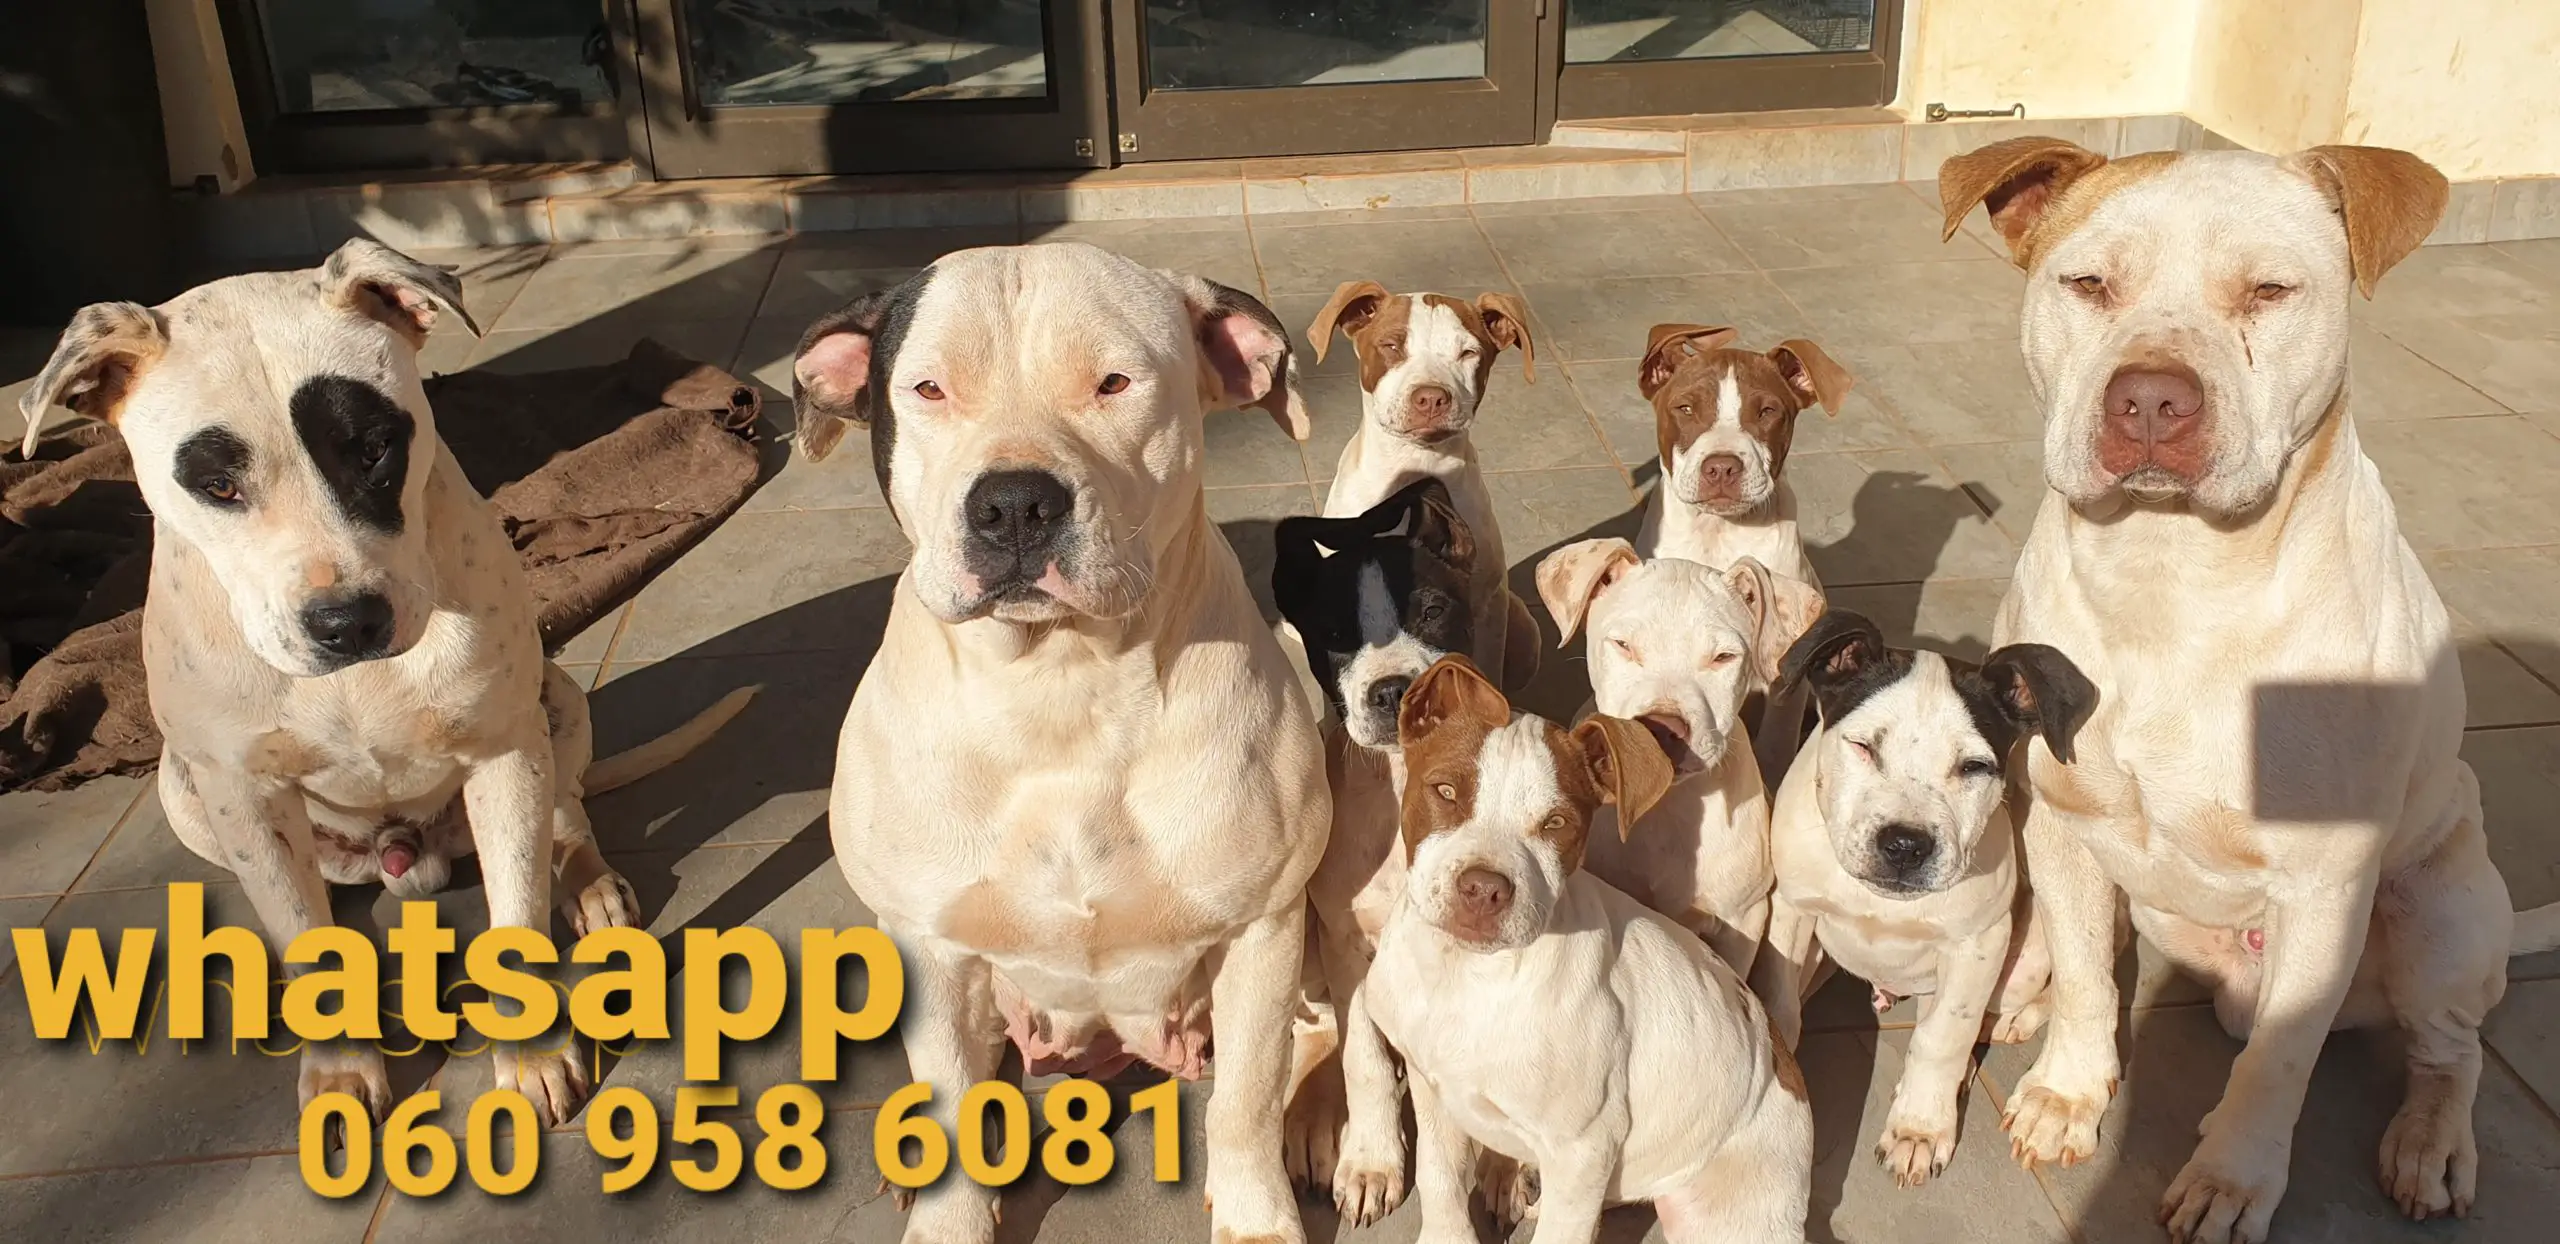 Pitbull Puppies in Johannesburg (24/07/2021)